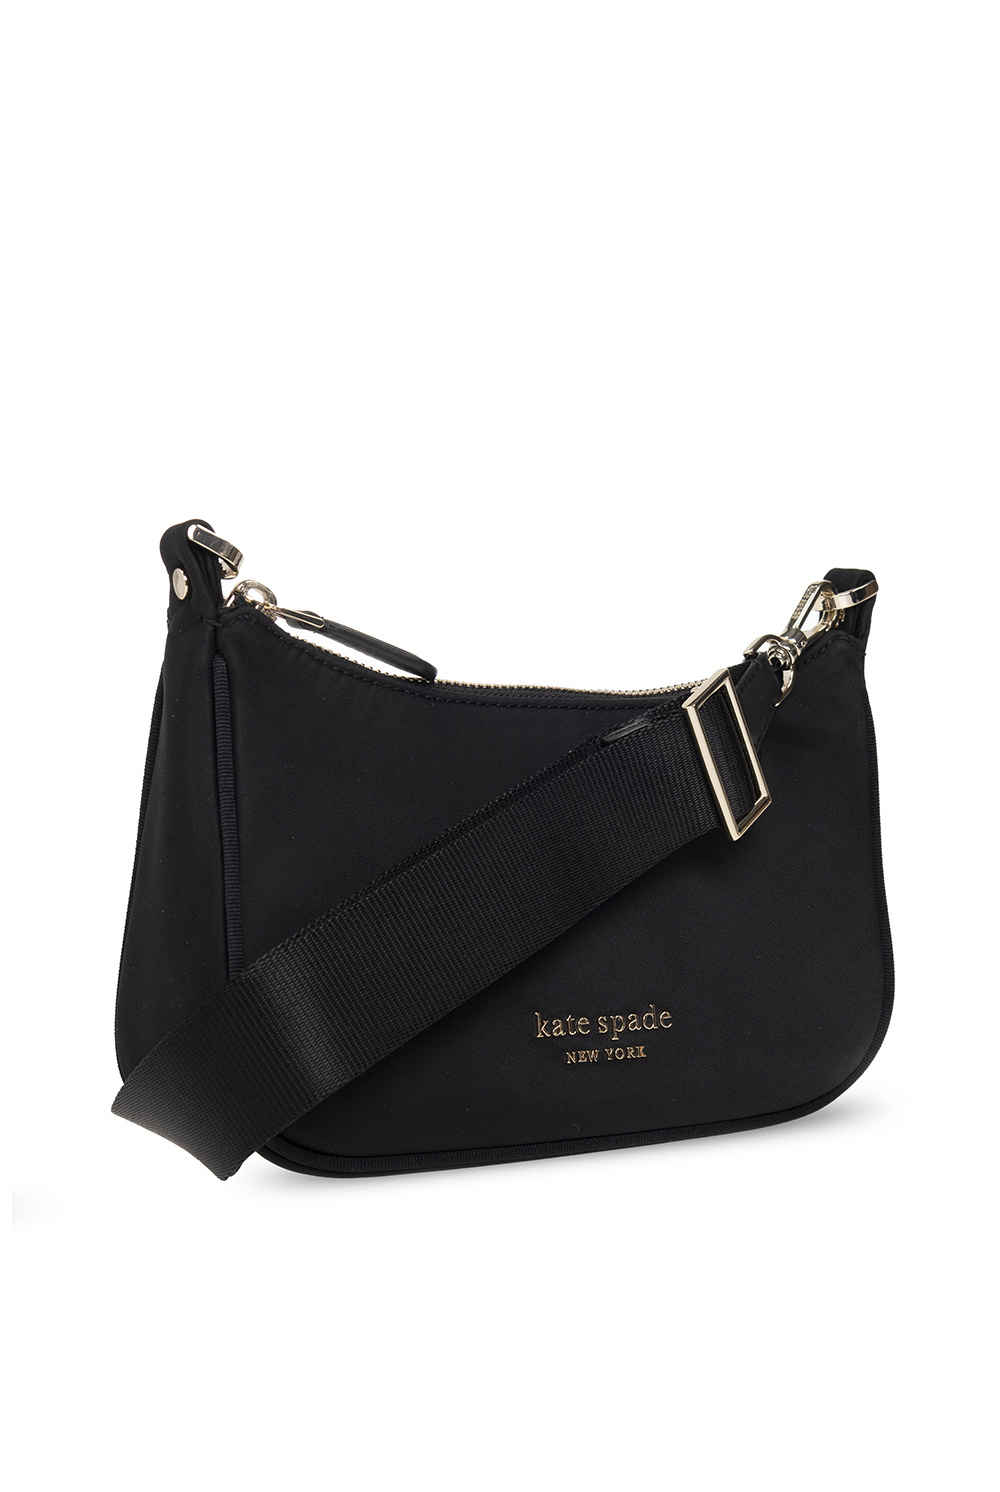 Kate Spade ‘A Little Better Sam Small’ shoulder kag bag